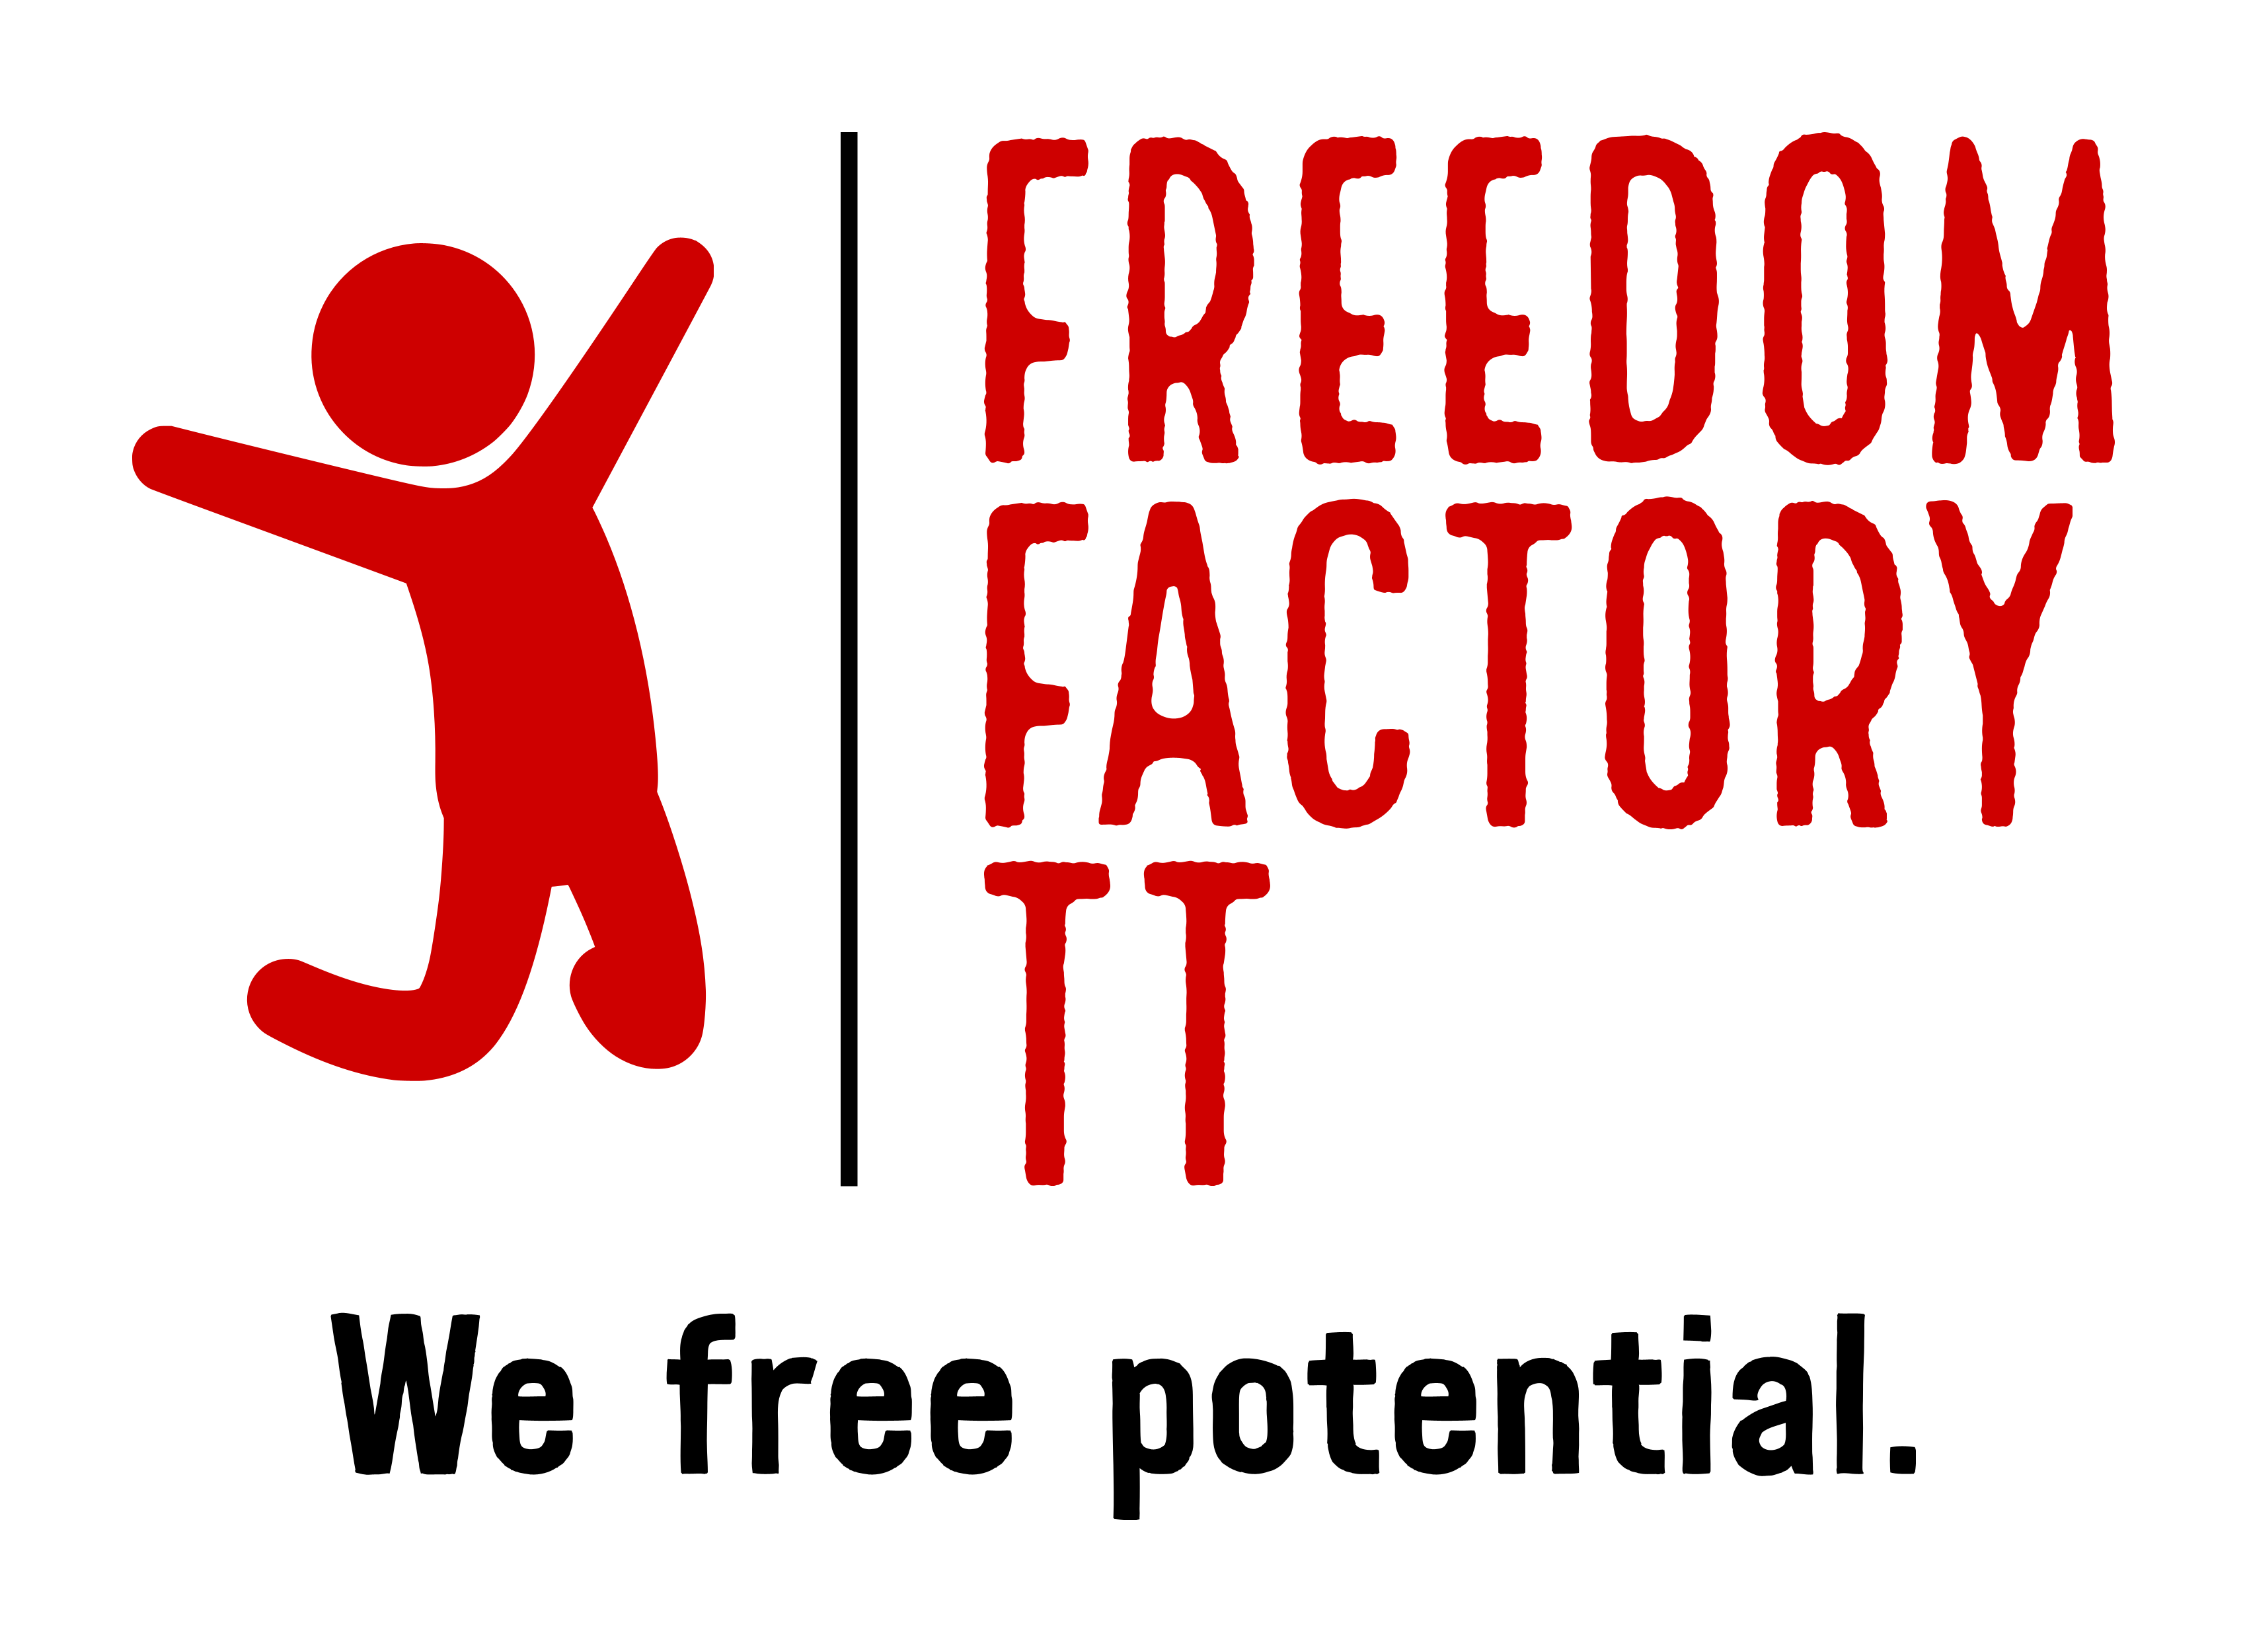 Freedom Factory TT